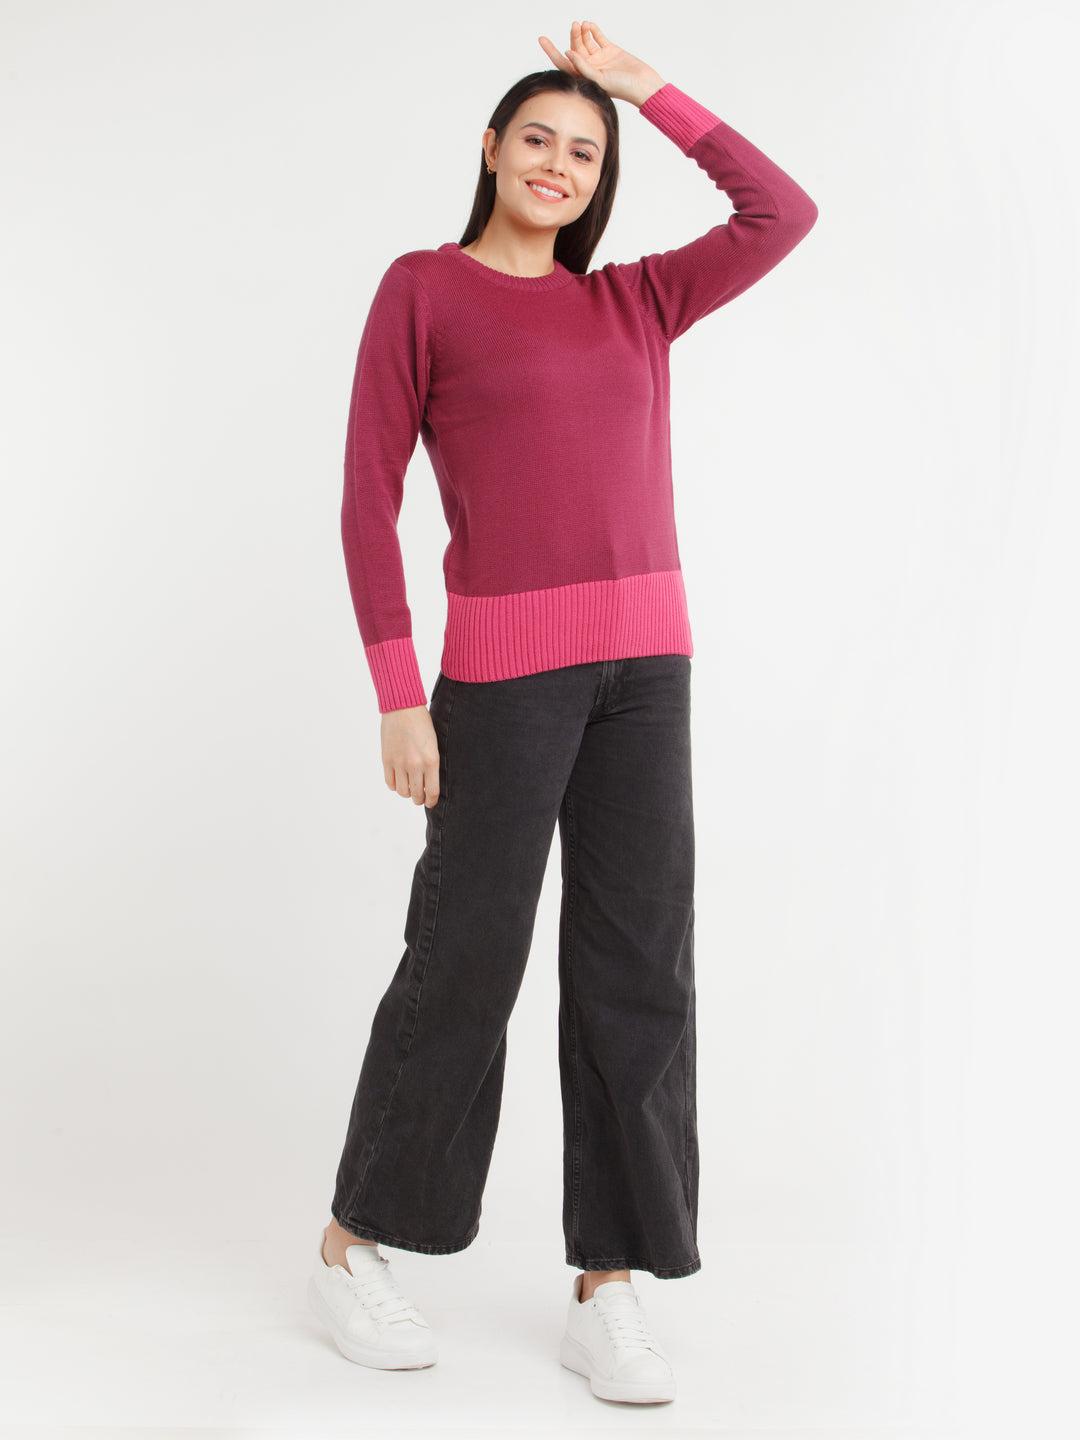 Purple Colorblock Sweater For Women